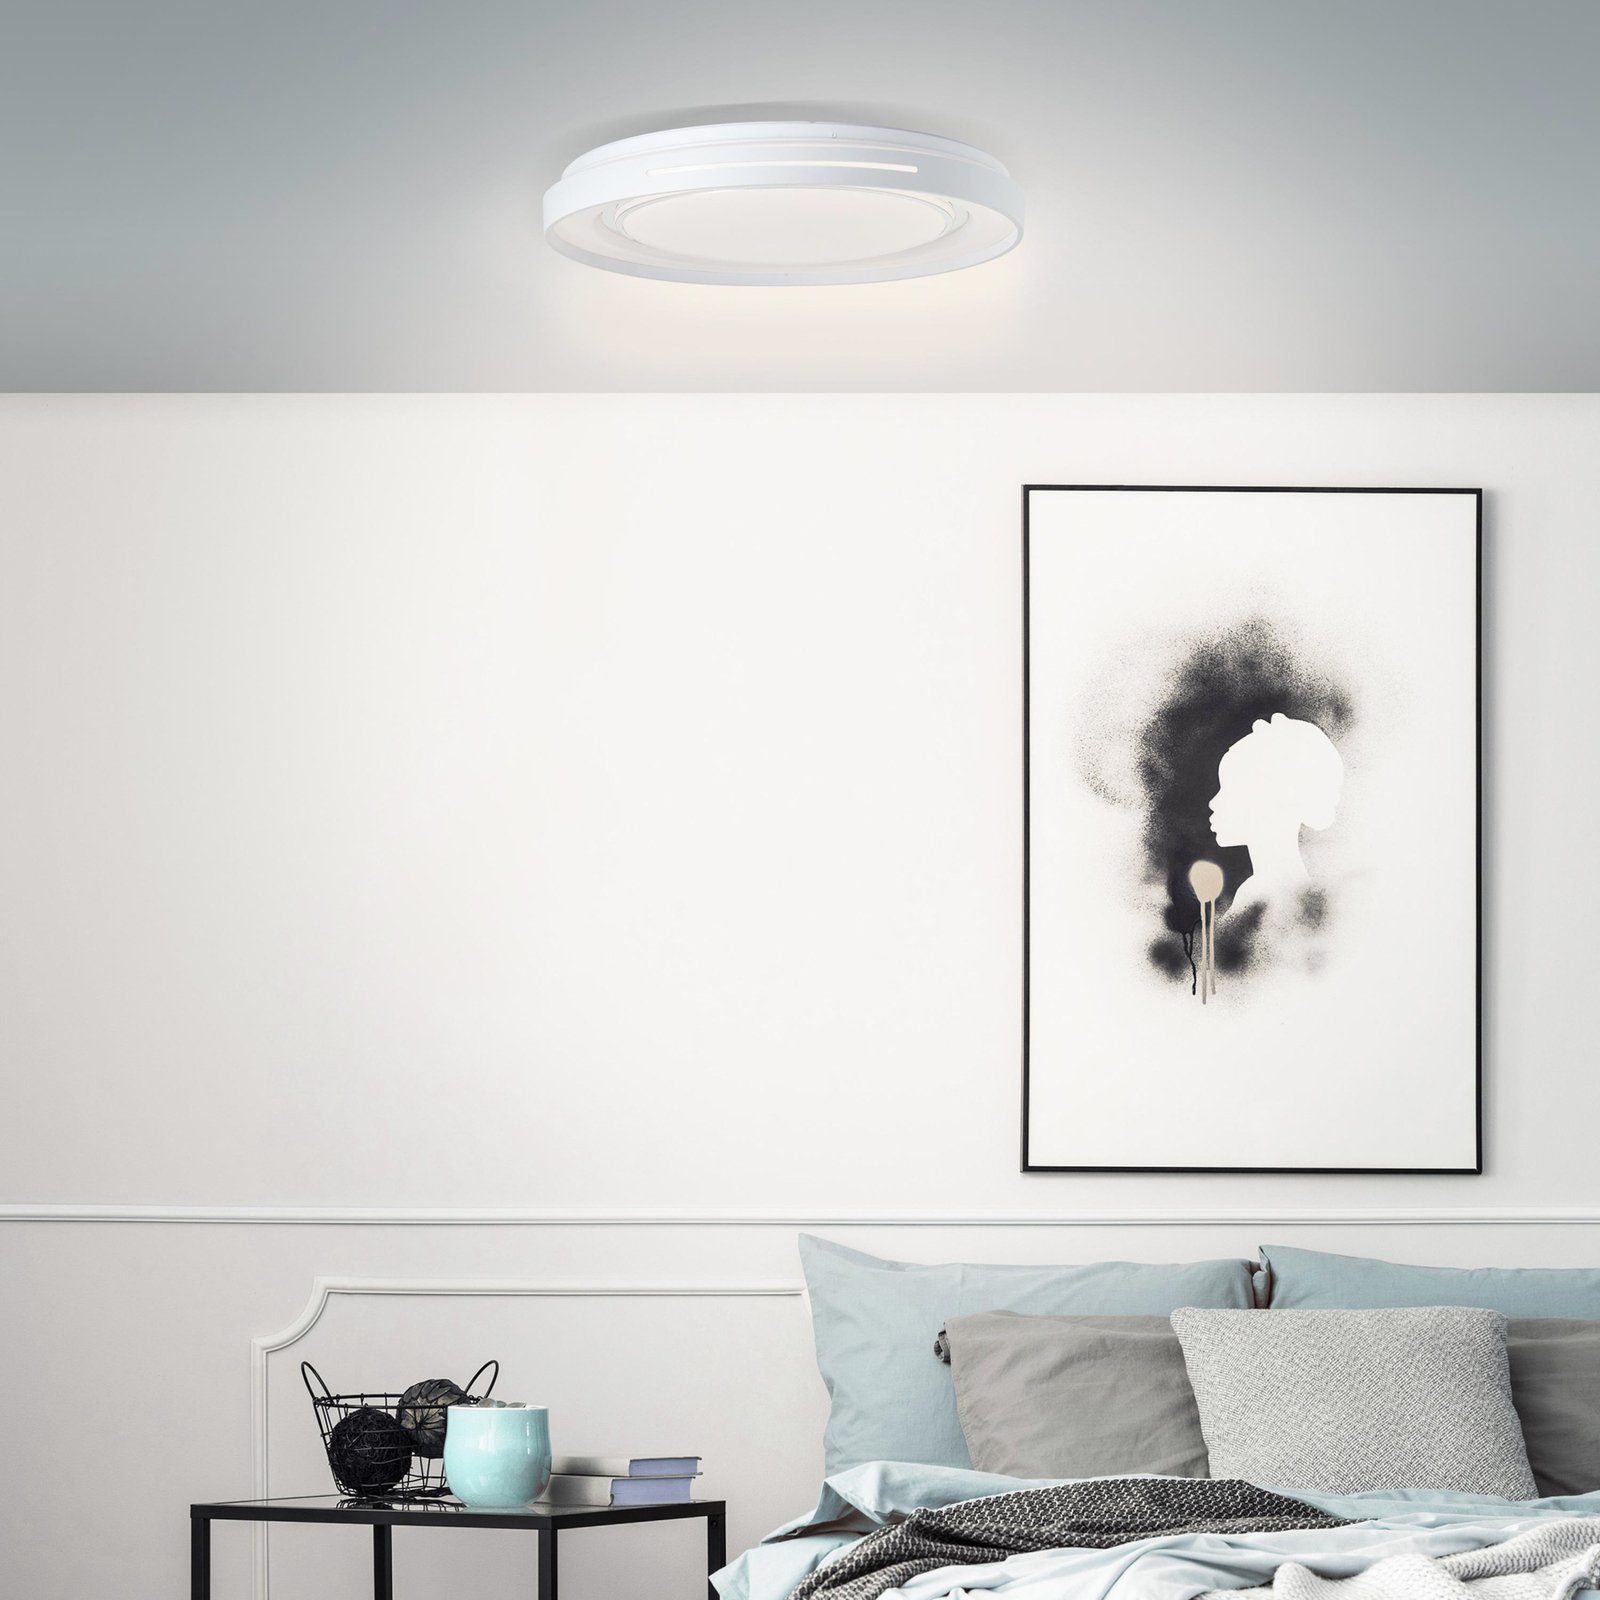 LED ceiling lamp Barty, white/chrome, Ø 48.5 cm, CCT, metal